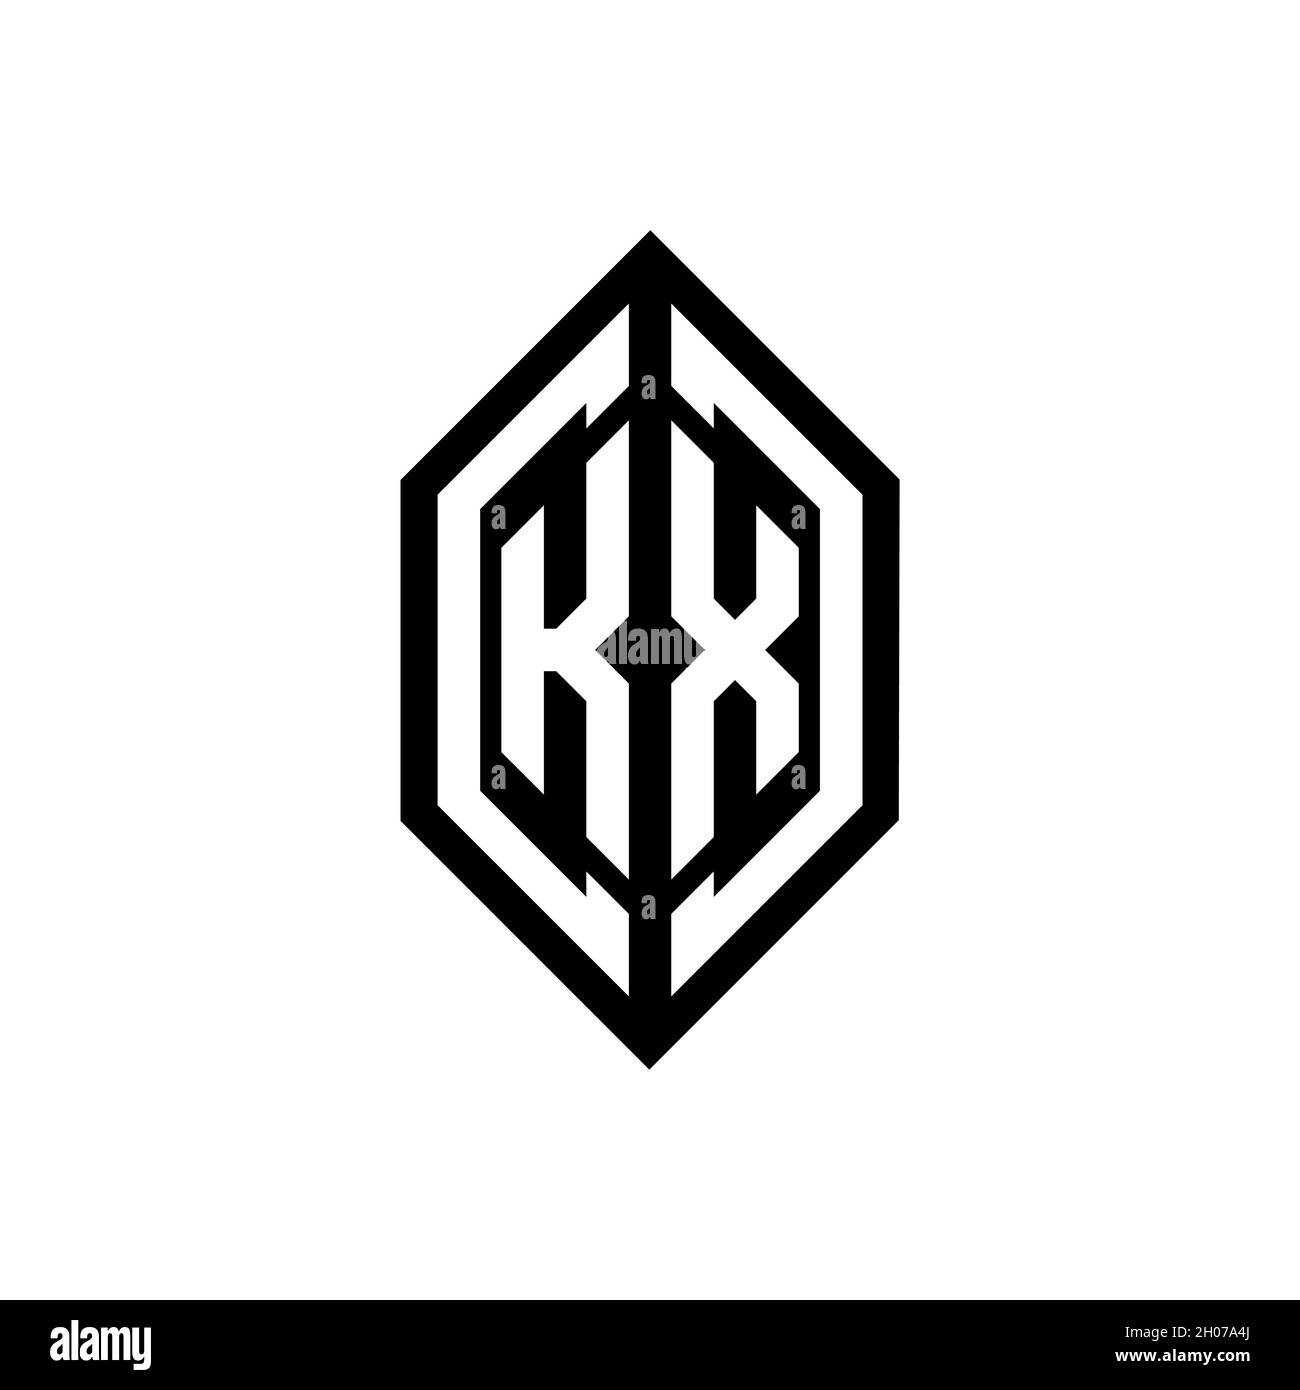 KX logo with geometric shape vector monogram design template isolated ...